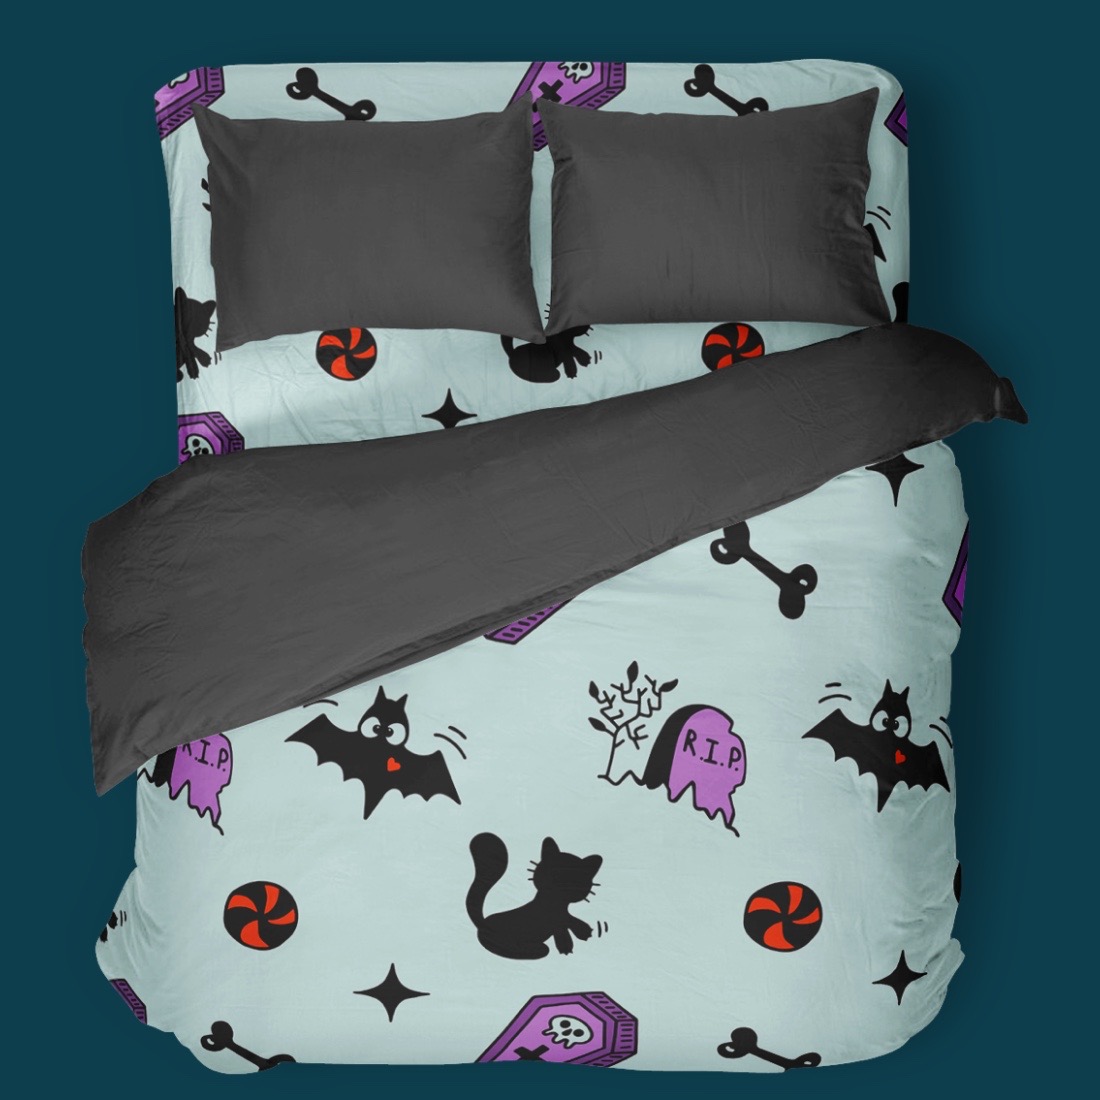 Bed linen with Halloween Seamless Patterns Set design.